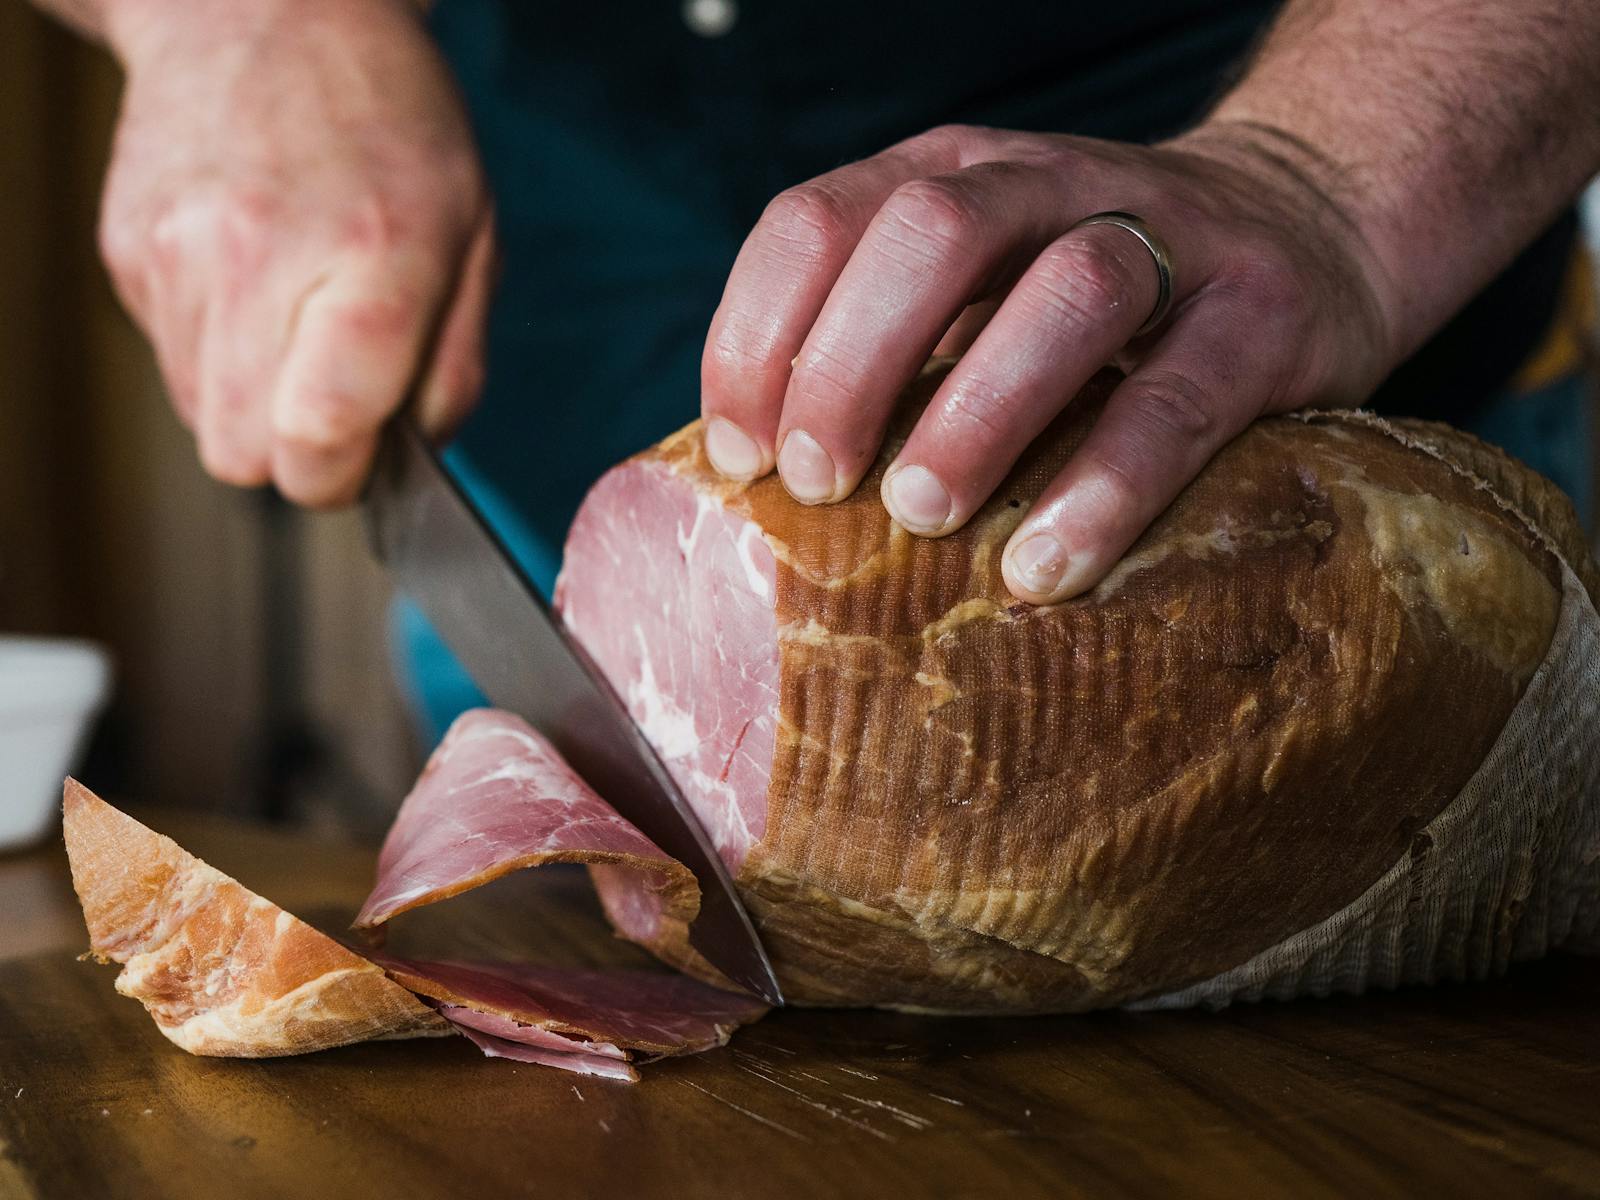 Image shows Casalinga's Boneless Ham being sliced